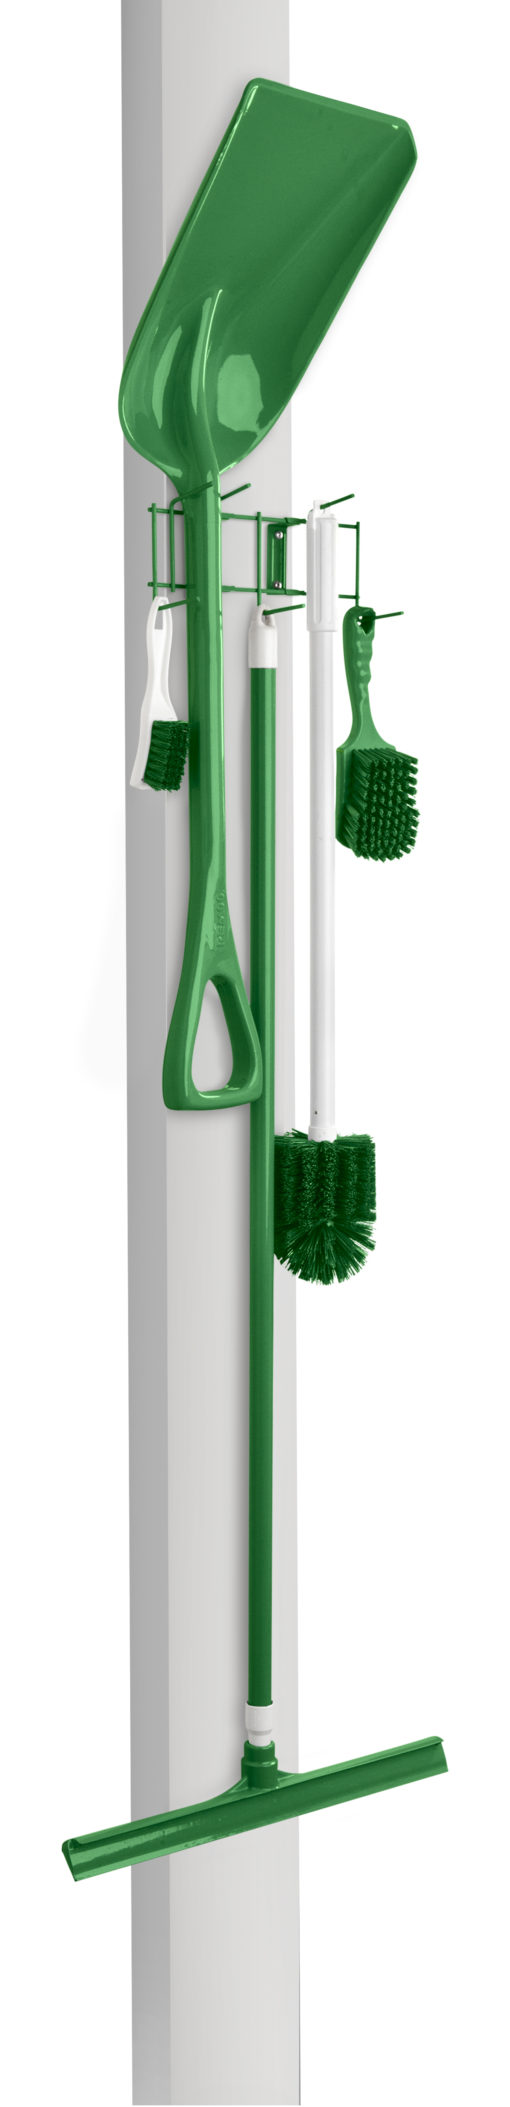 Green 10" Utility / Sanitation Rack